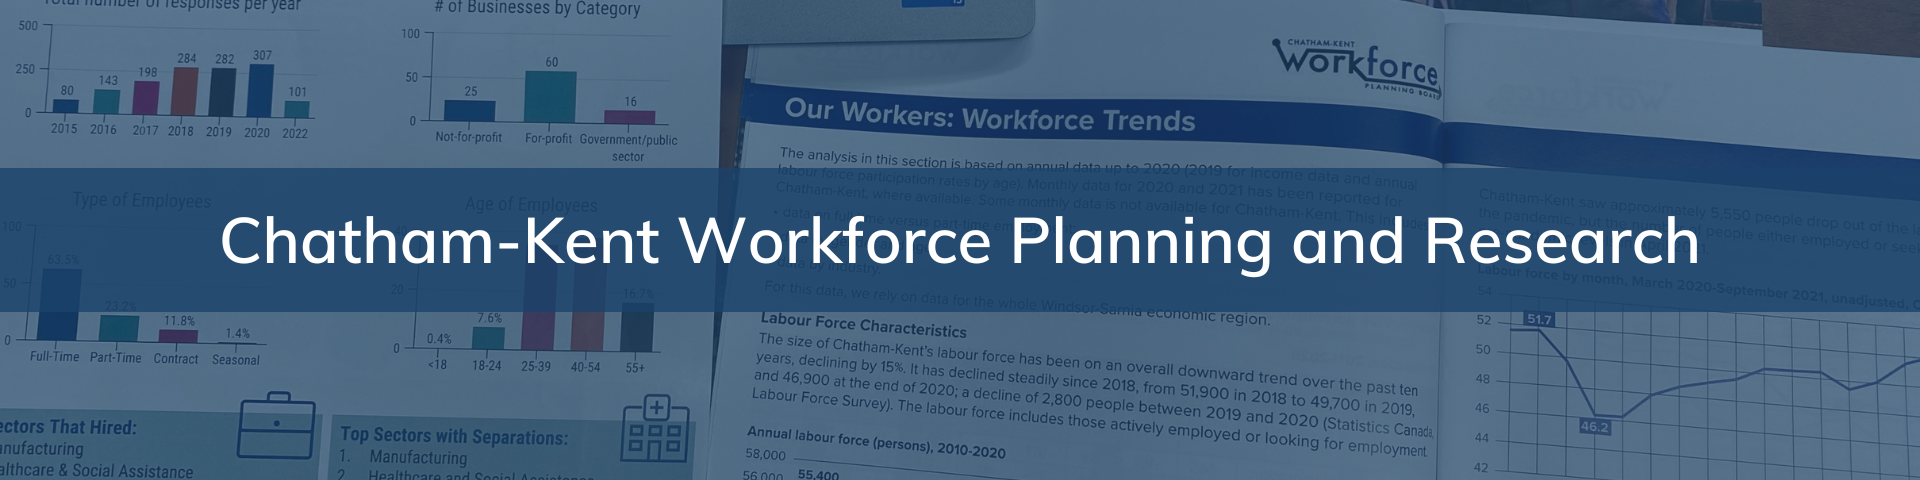 Chatham-Kent Workforce Planning & Research header image